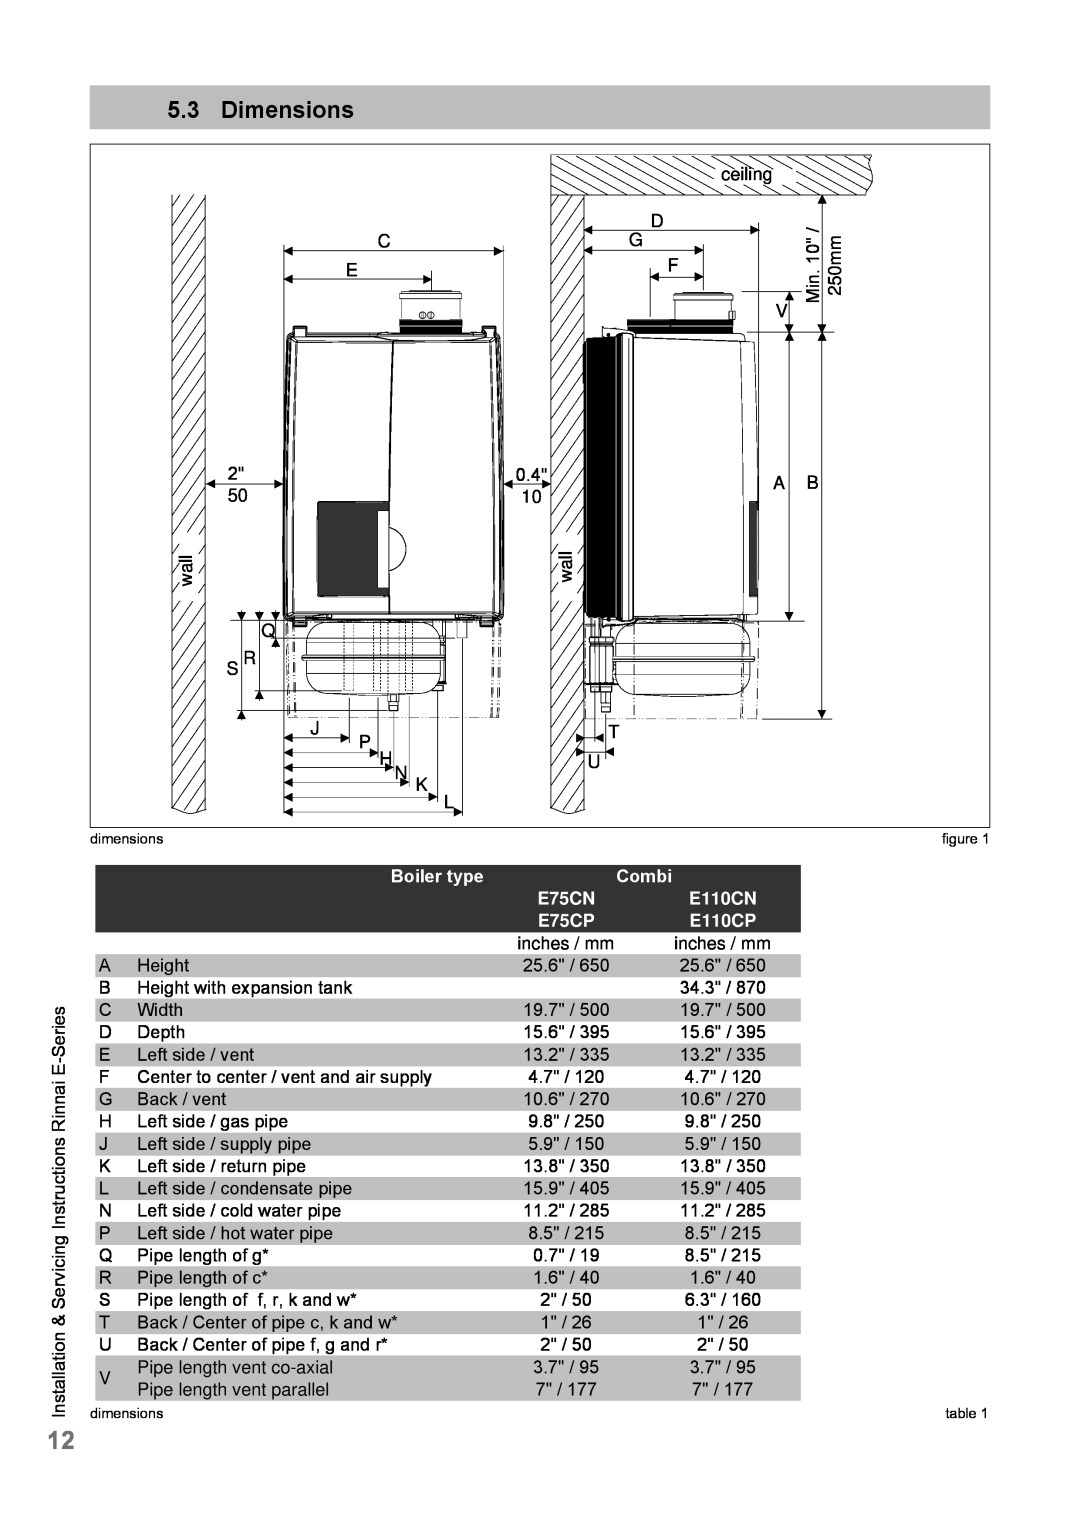 Rinnai E110CP user manual Dimensions, Boiler type, Combi, E75CN, E110CN, E75CP 